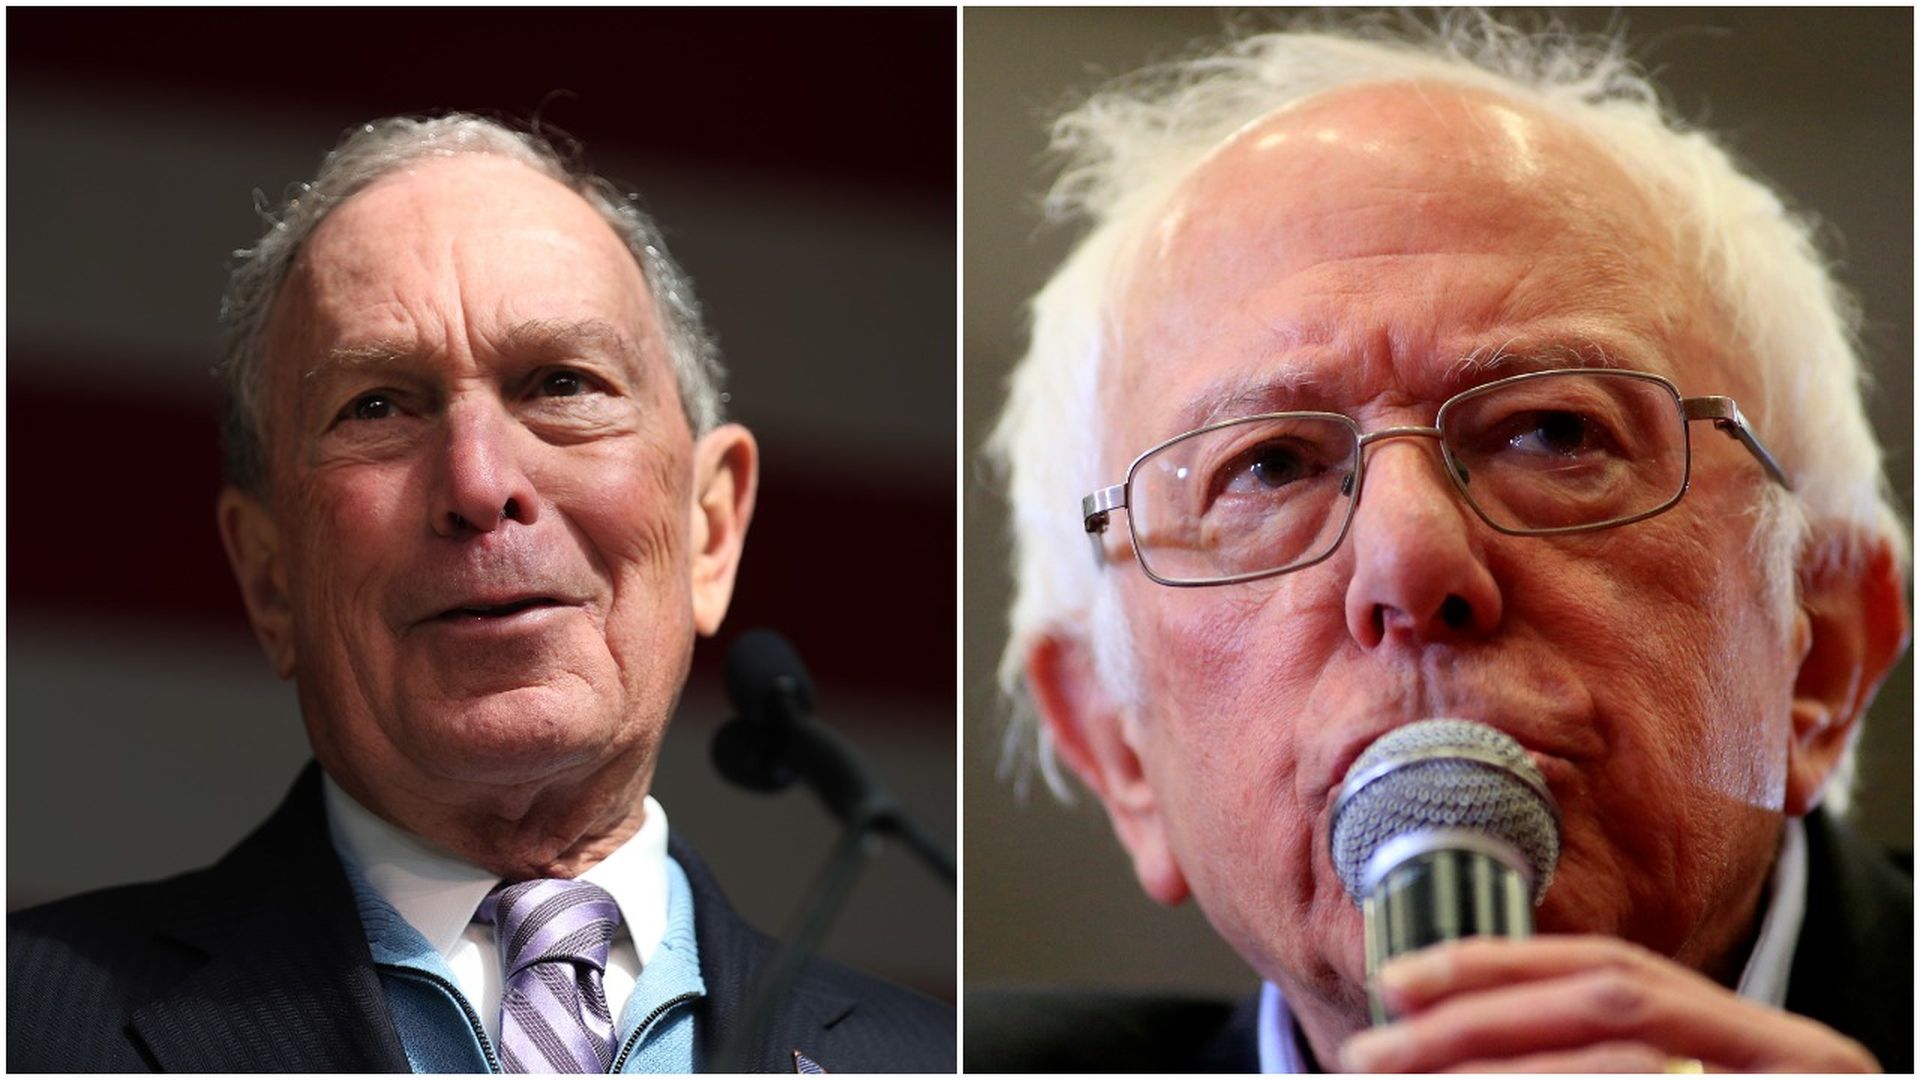 Bloomberg and Sanders in a split-screen.